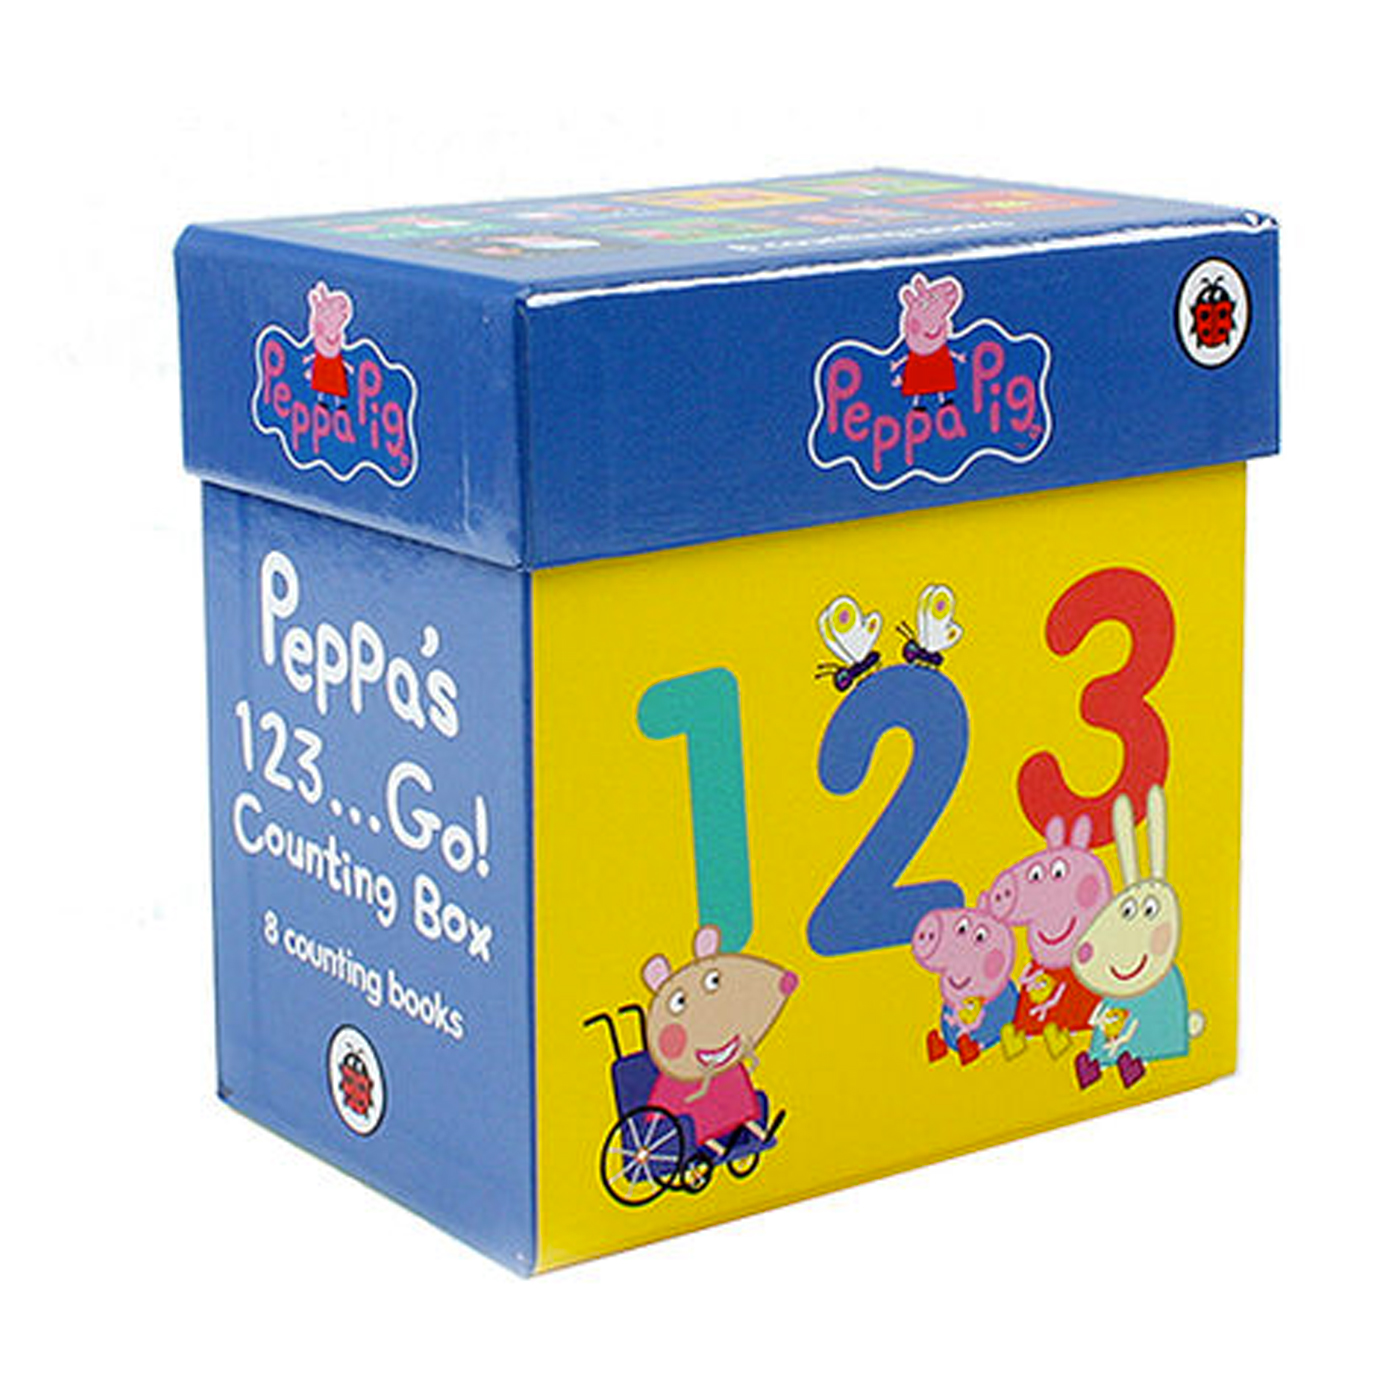 LADYBIRD Peppas 123... Go! Counting Box